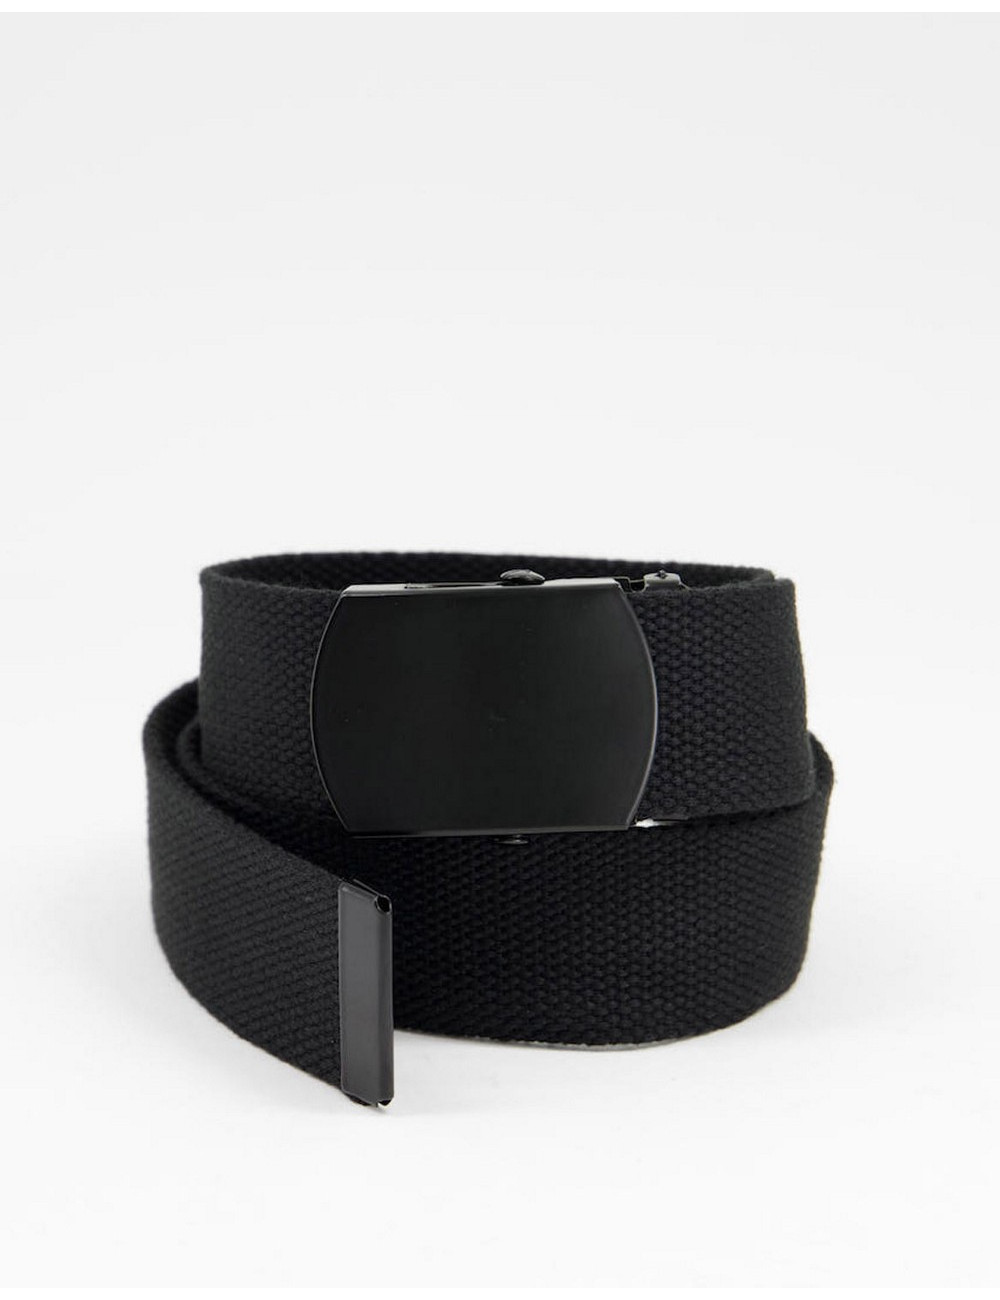 New Look belt in black...